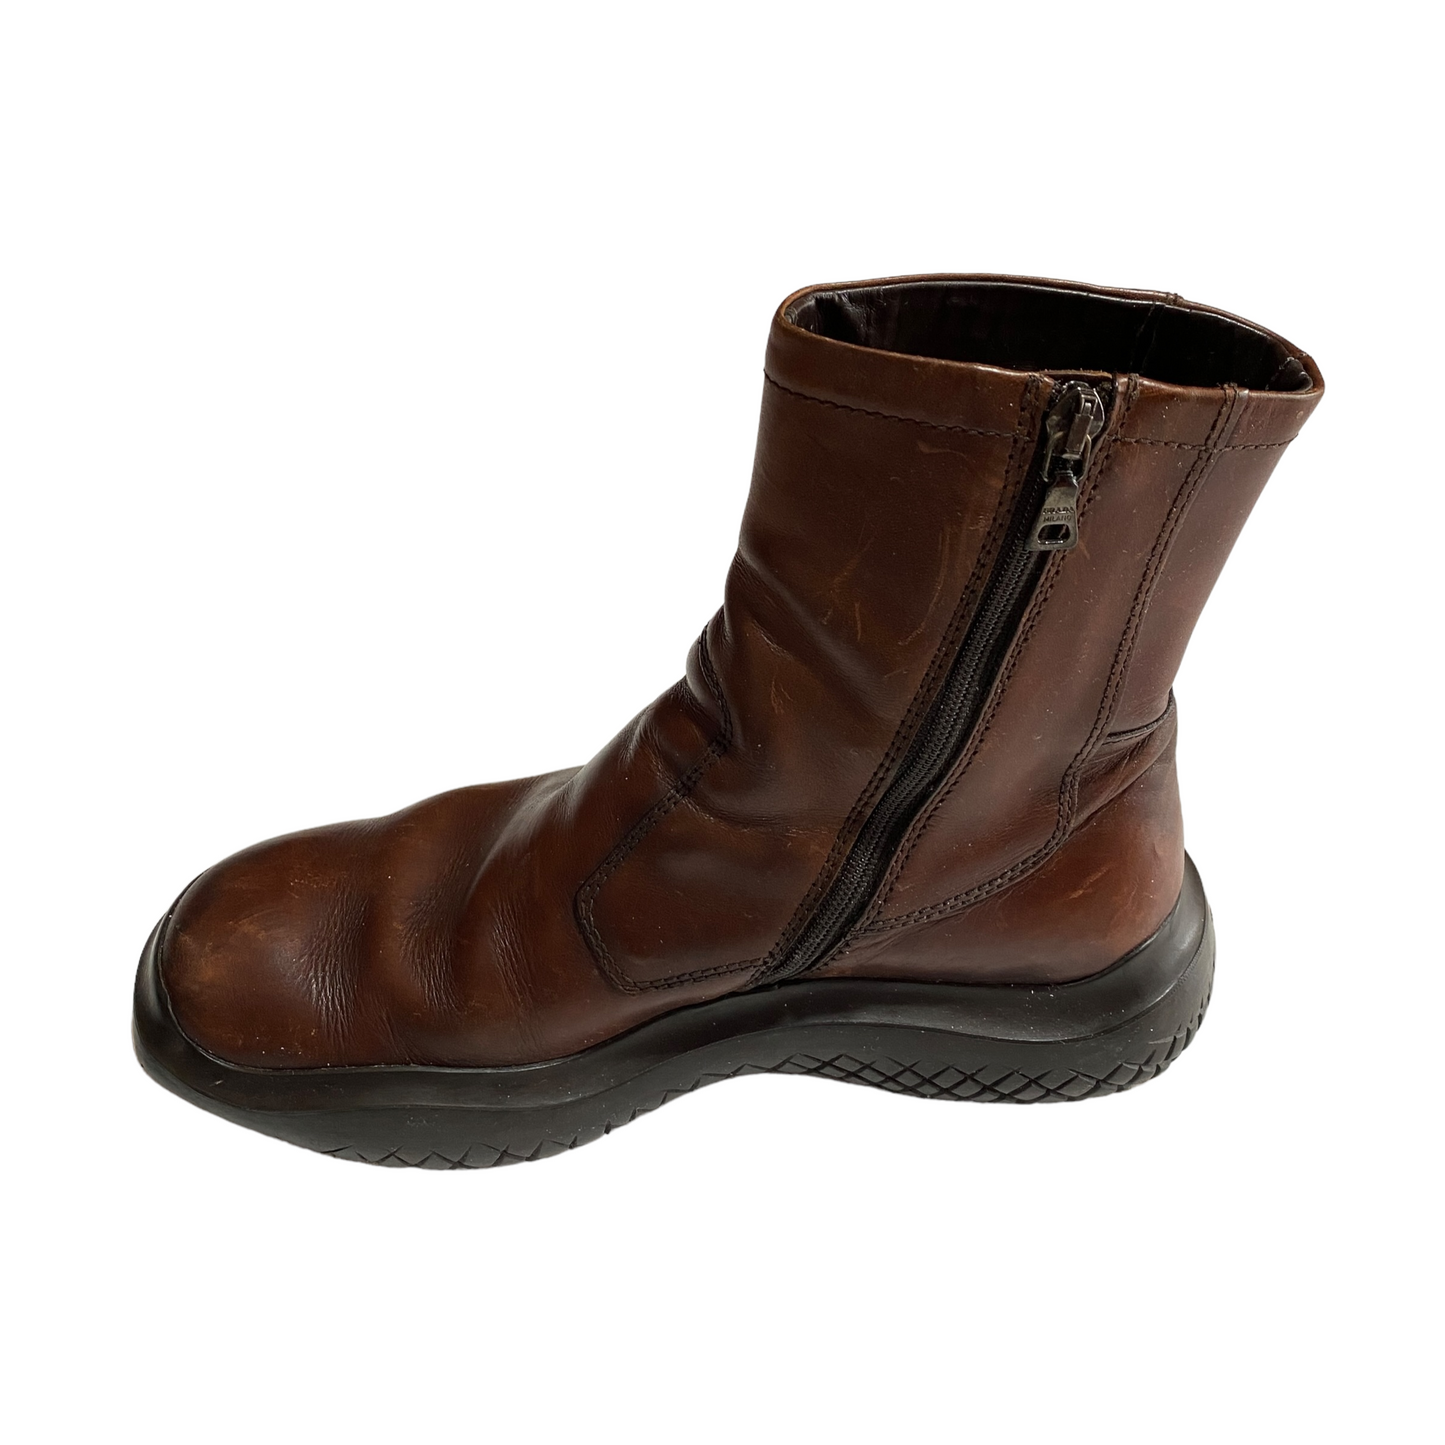 F/W 1999 Vibram Boots (37.5 EU)